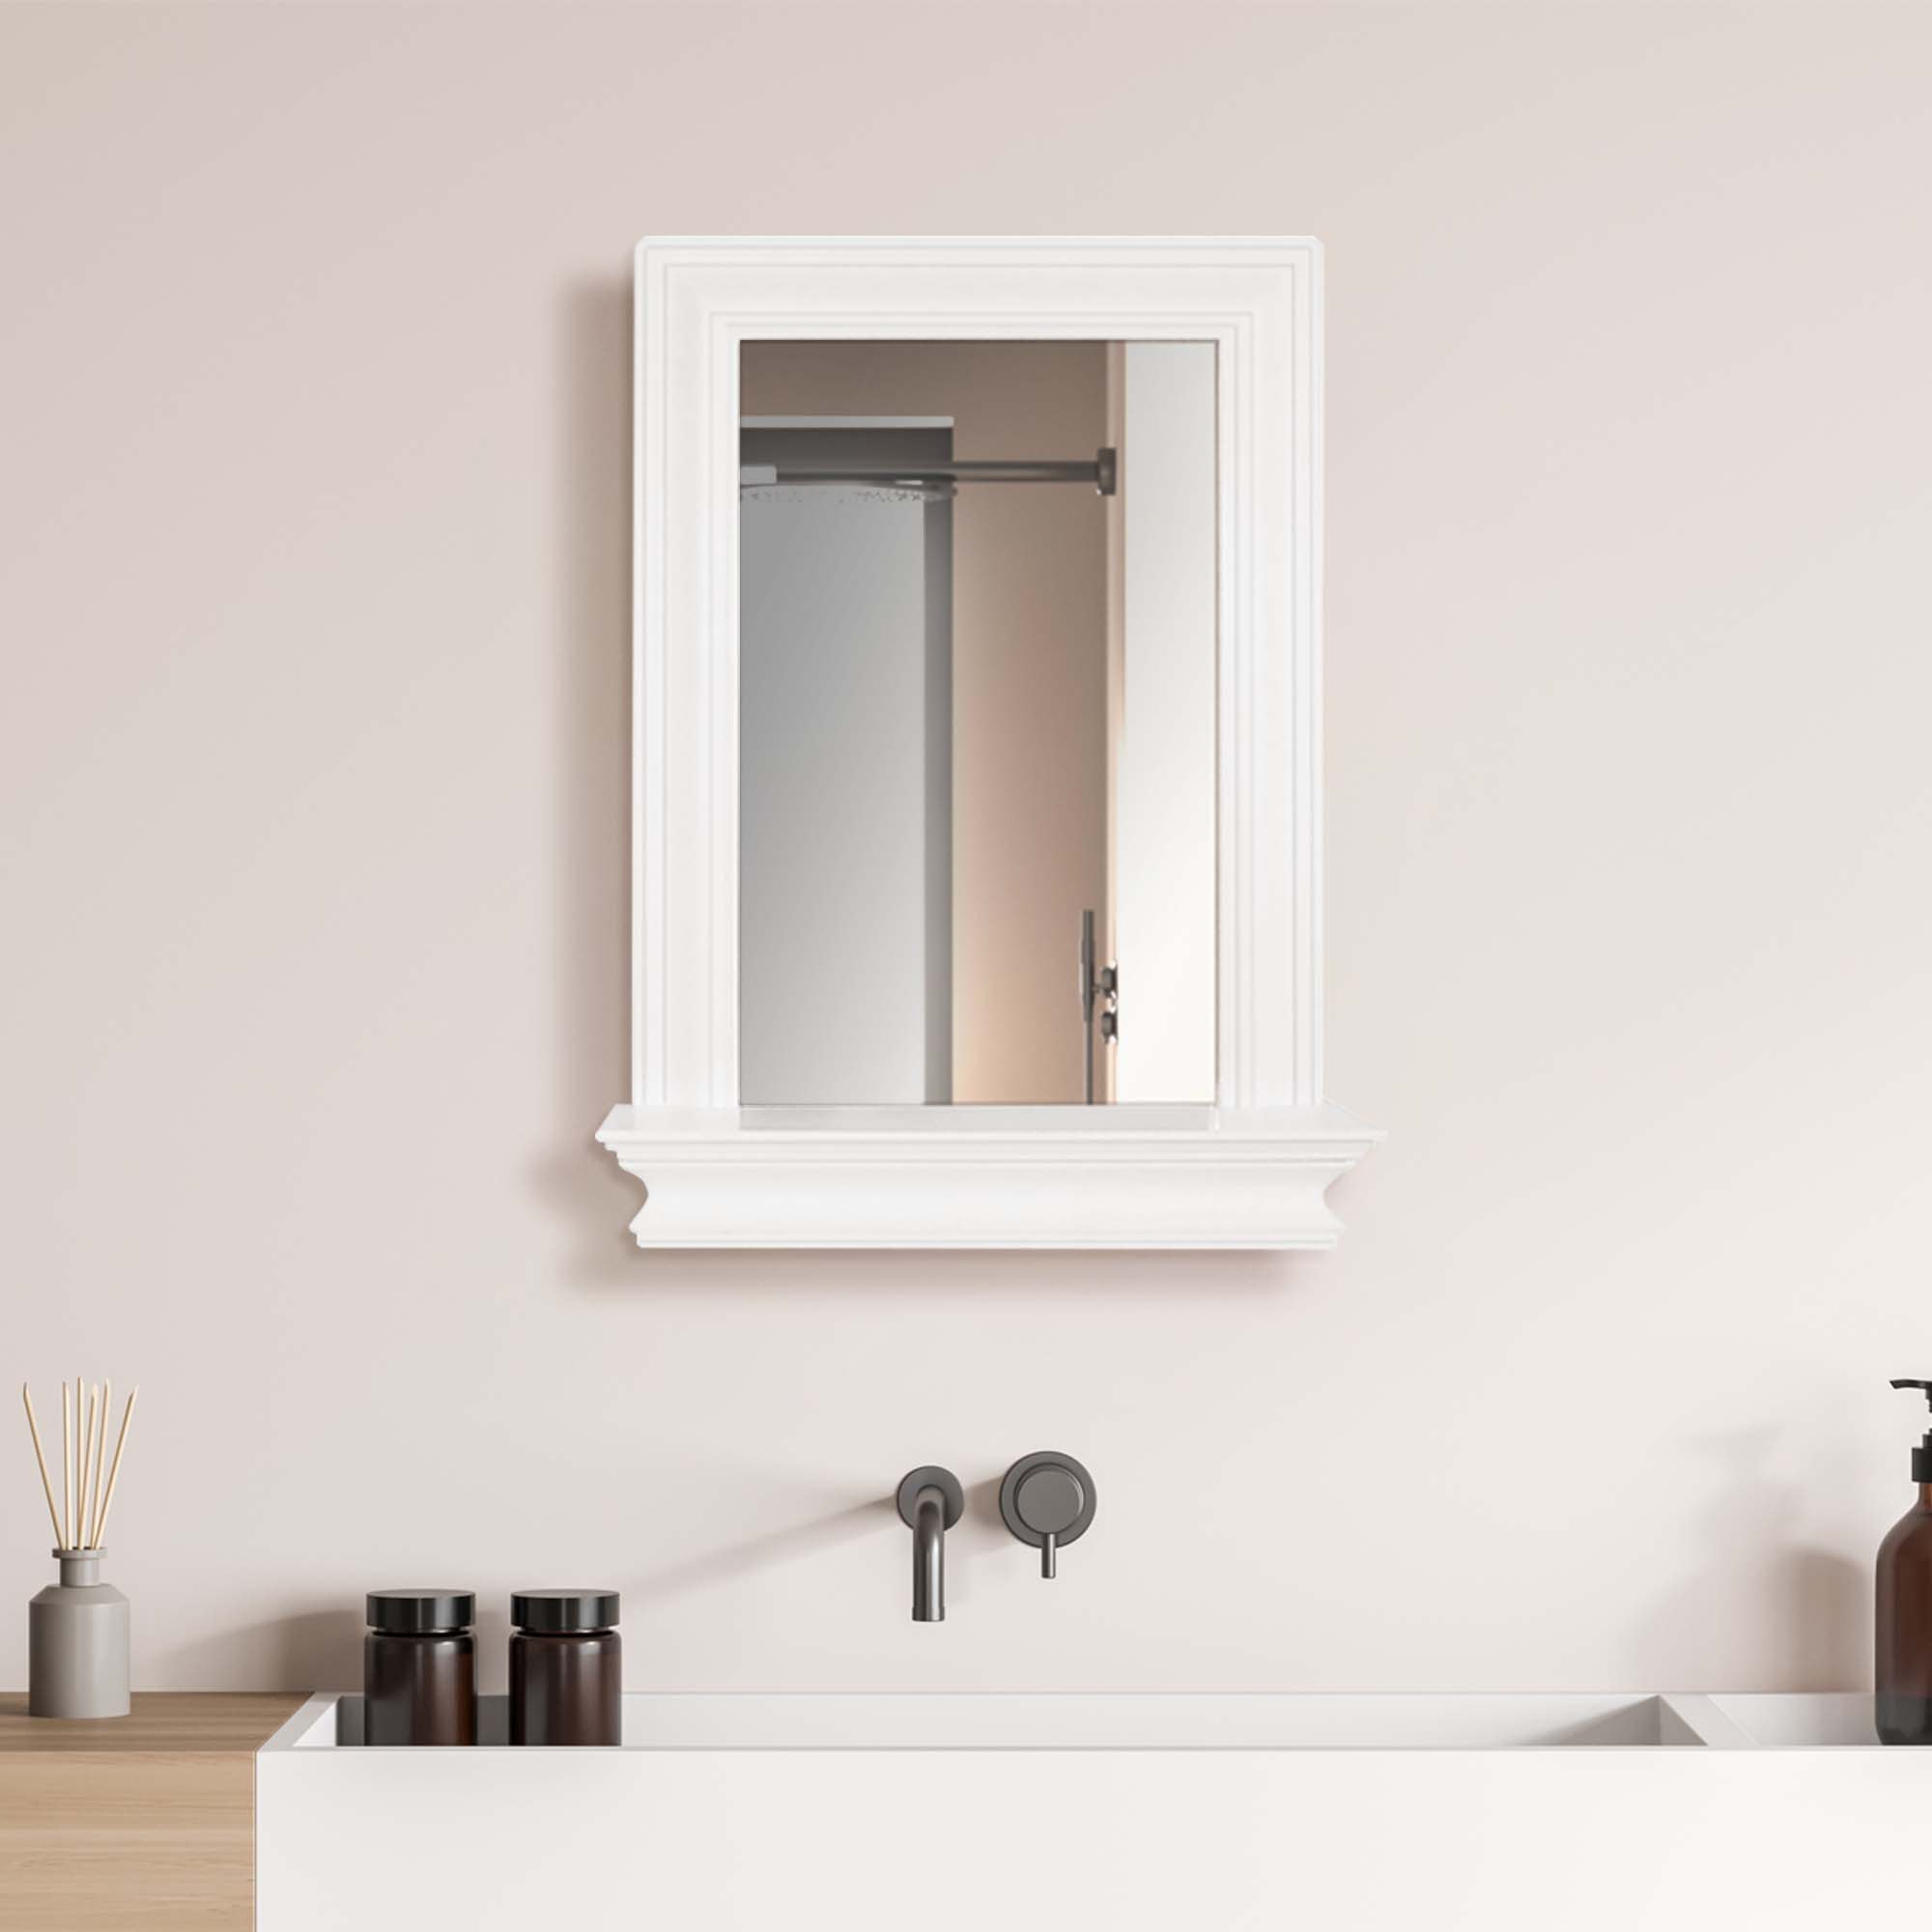 Teamson Home Stratford Wall Mirror with Shelf, White